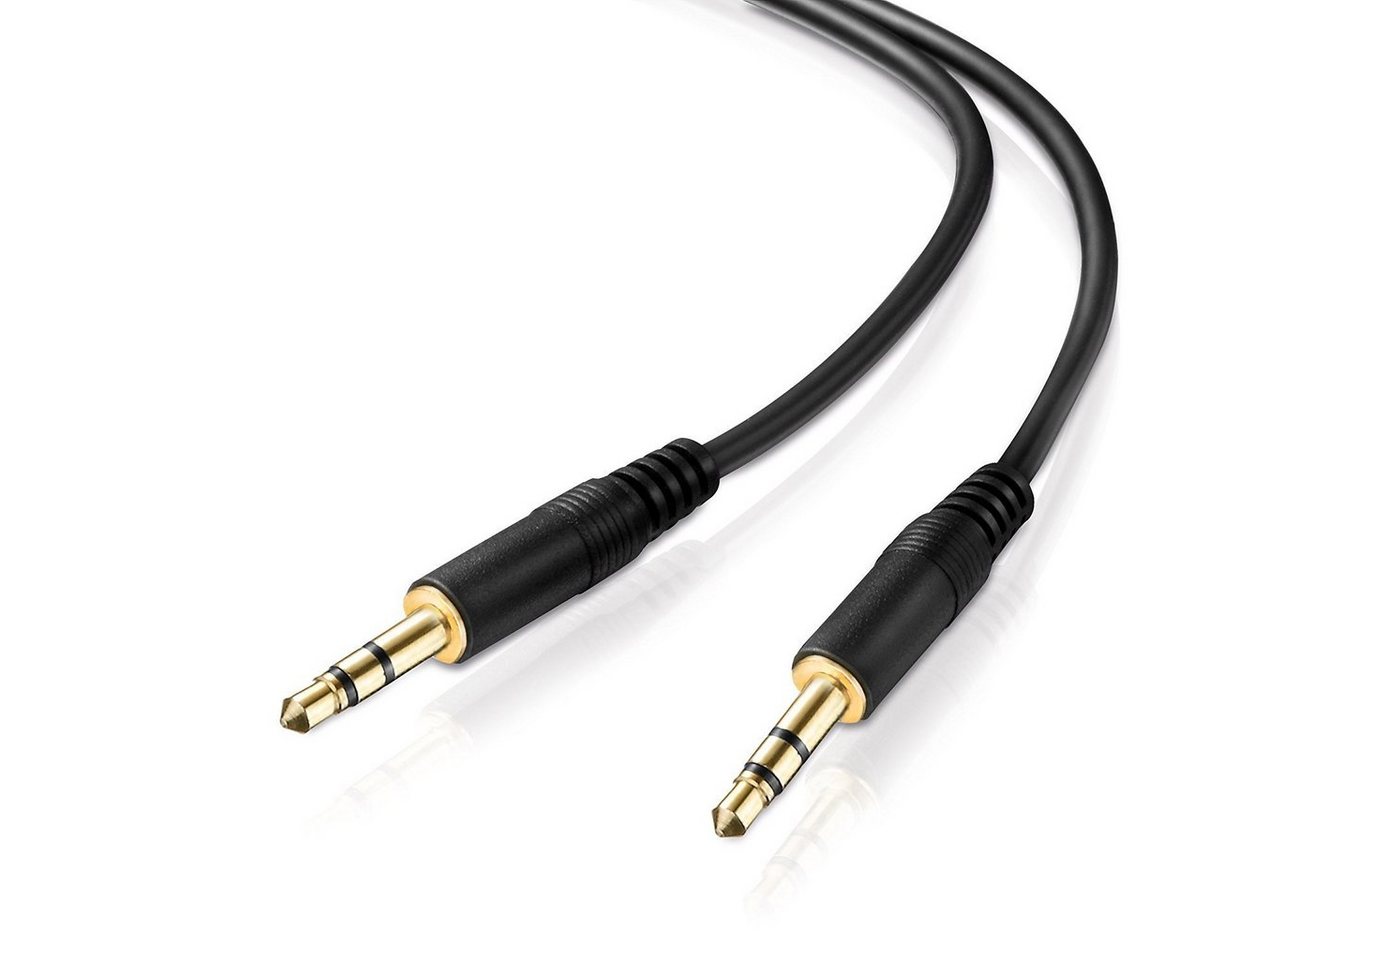 adaptare adaptare 1 m Stereo-Aux-Kabel 2-mal 3,5-mm-Stecker Klinke vergoldet Audio-Kabel von adaptare